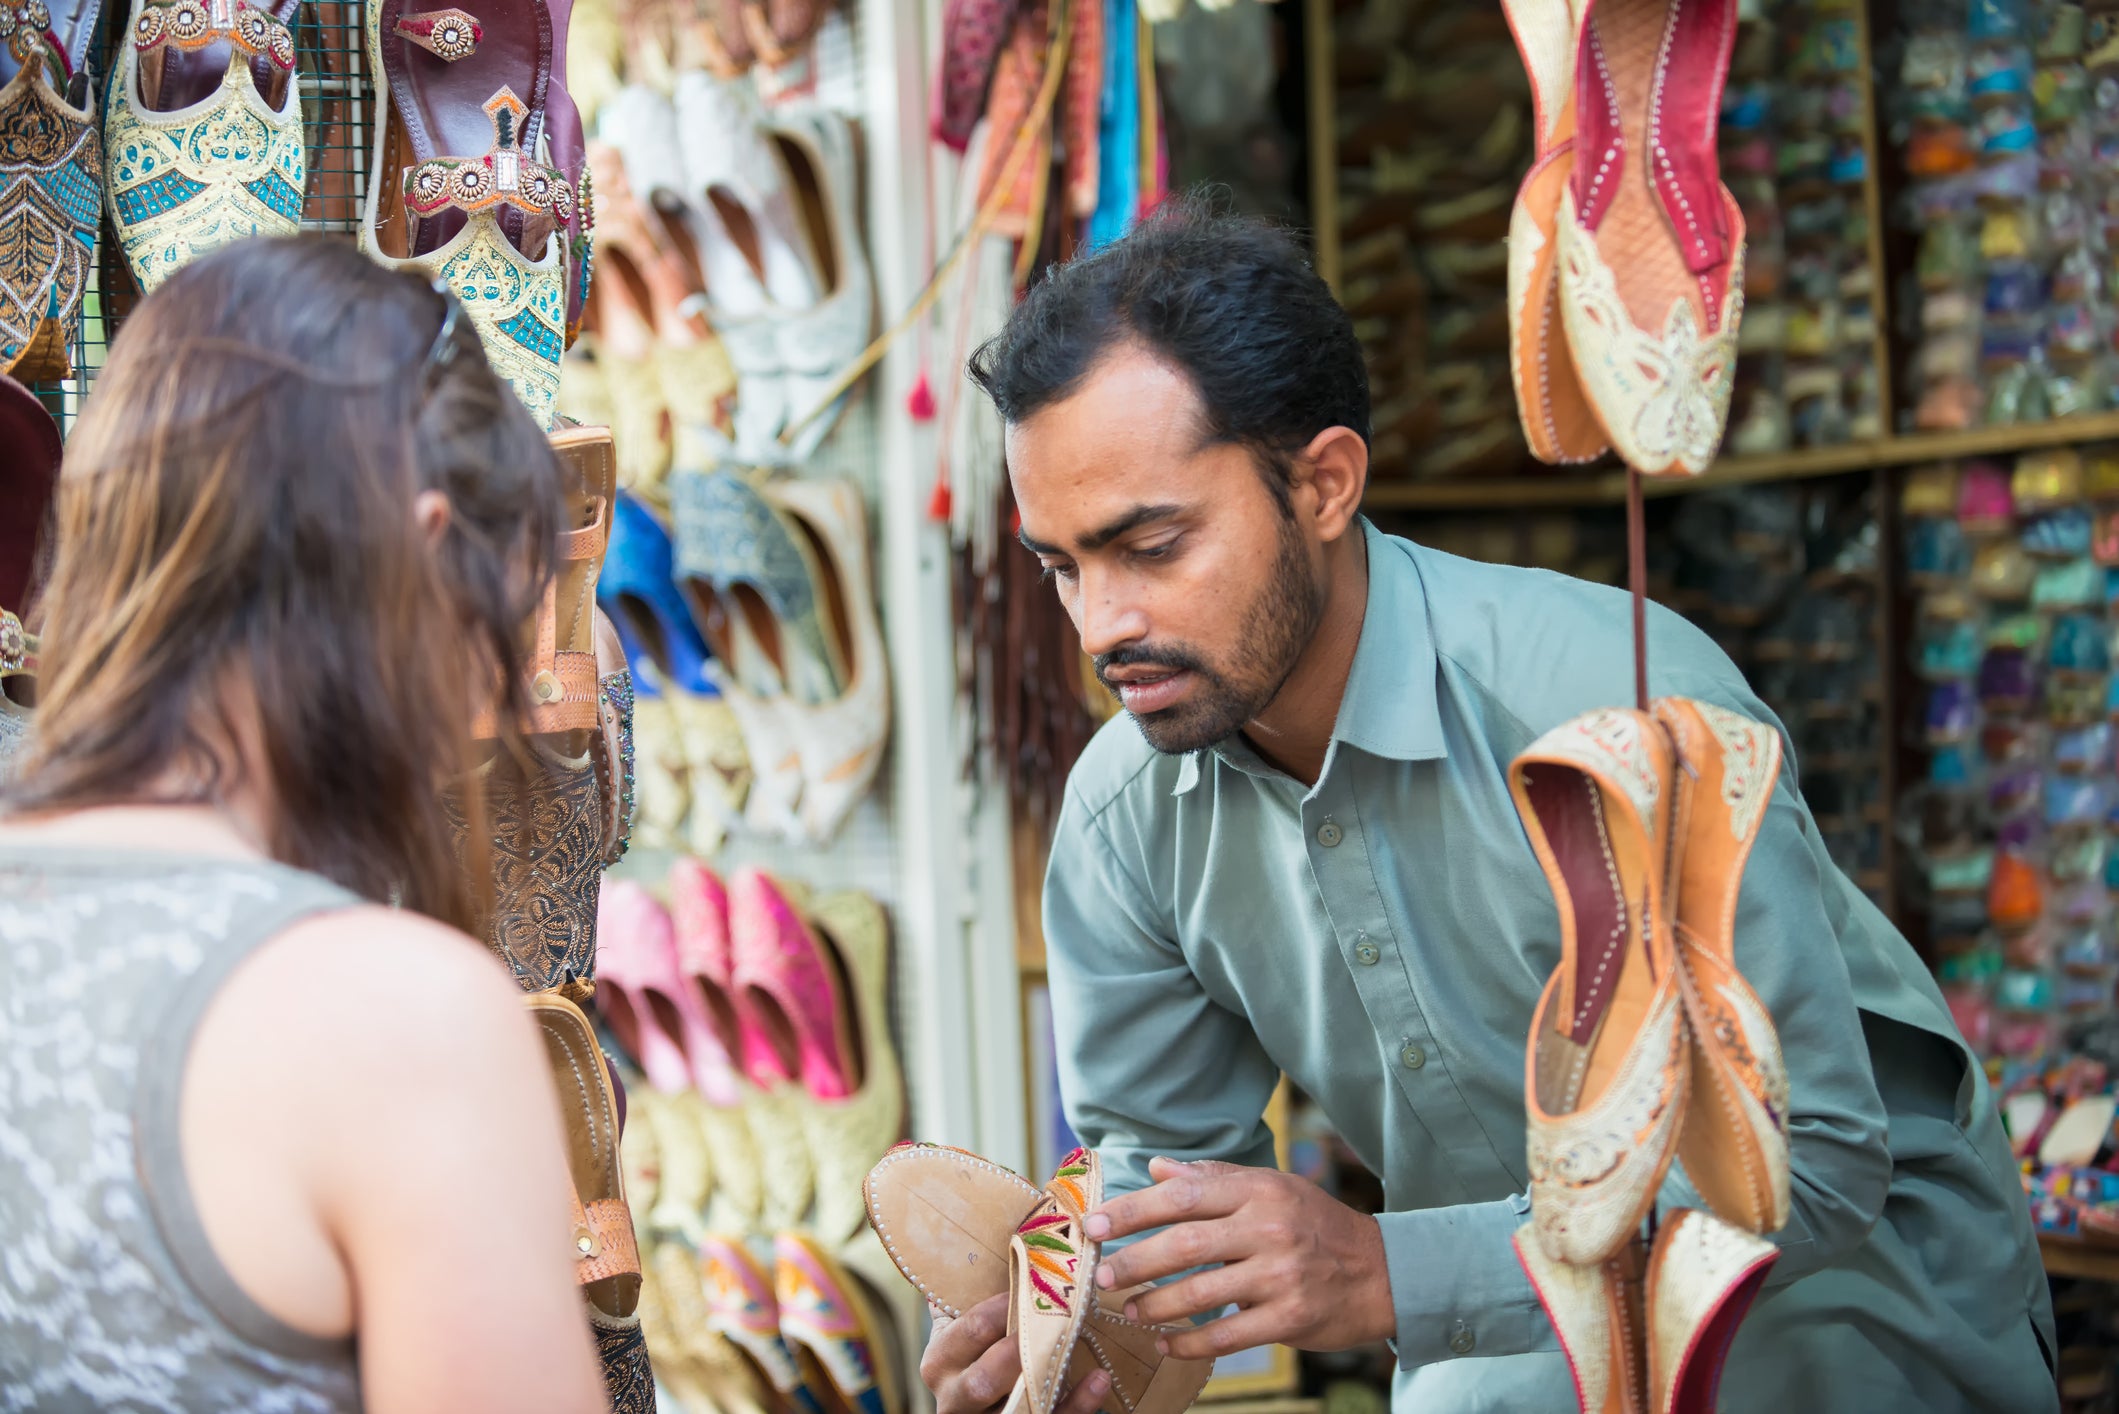 Salesman Showing Shoes to Woman Shopping at Souk, Dubai, UAE